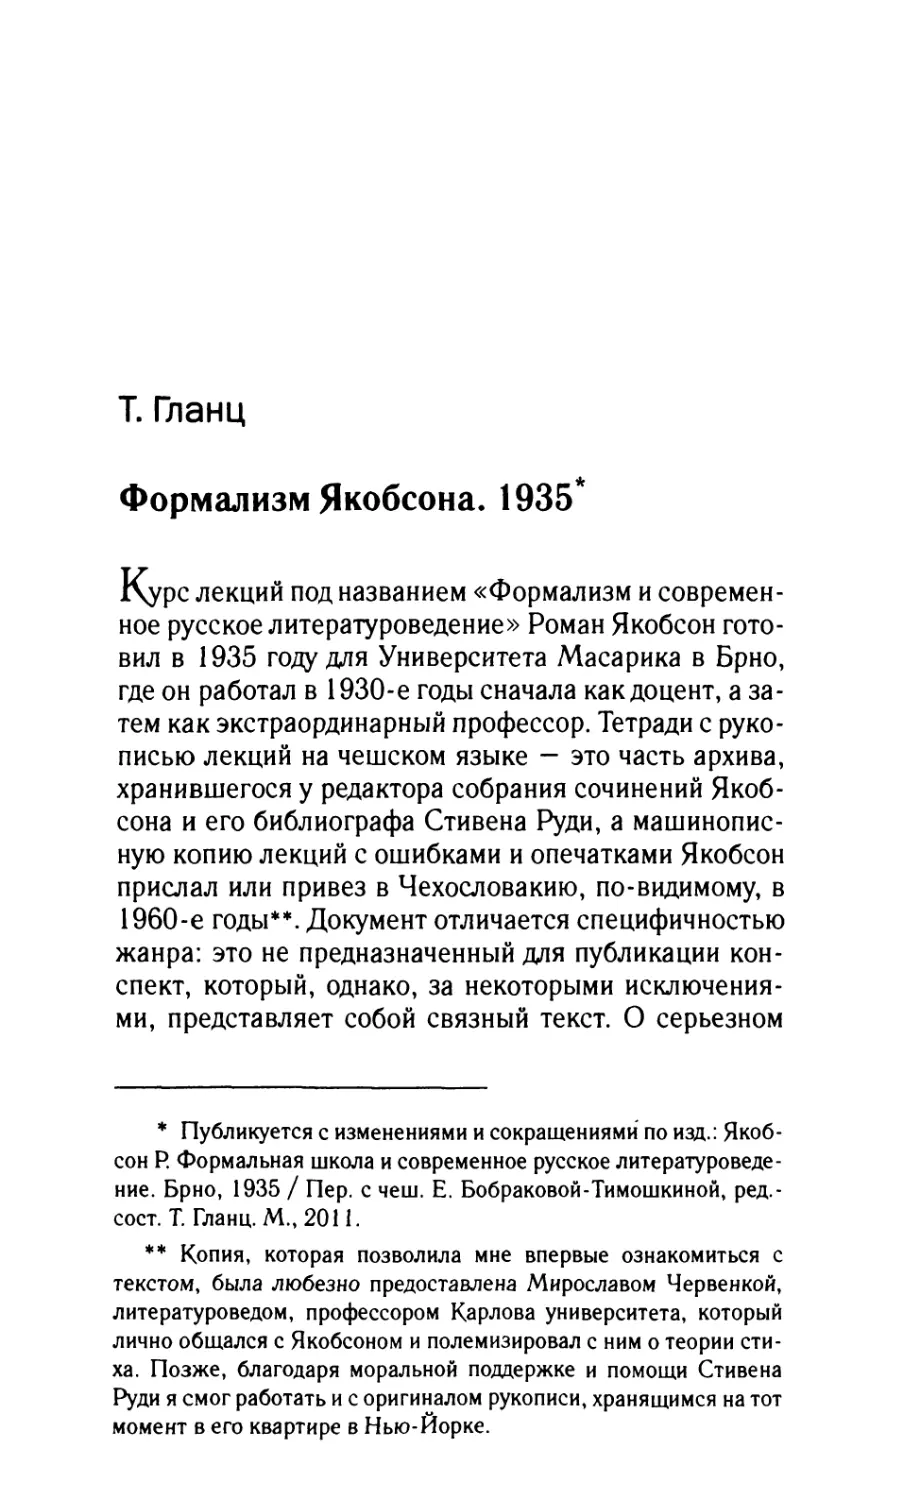 Гланц Т. Формализм Якобсона. 1935